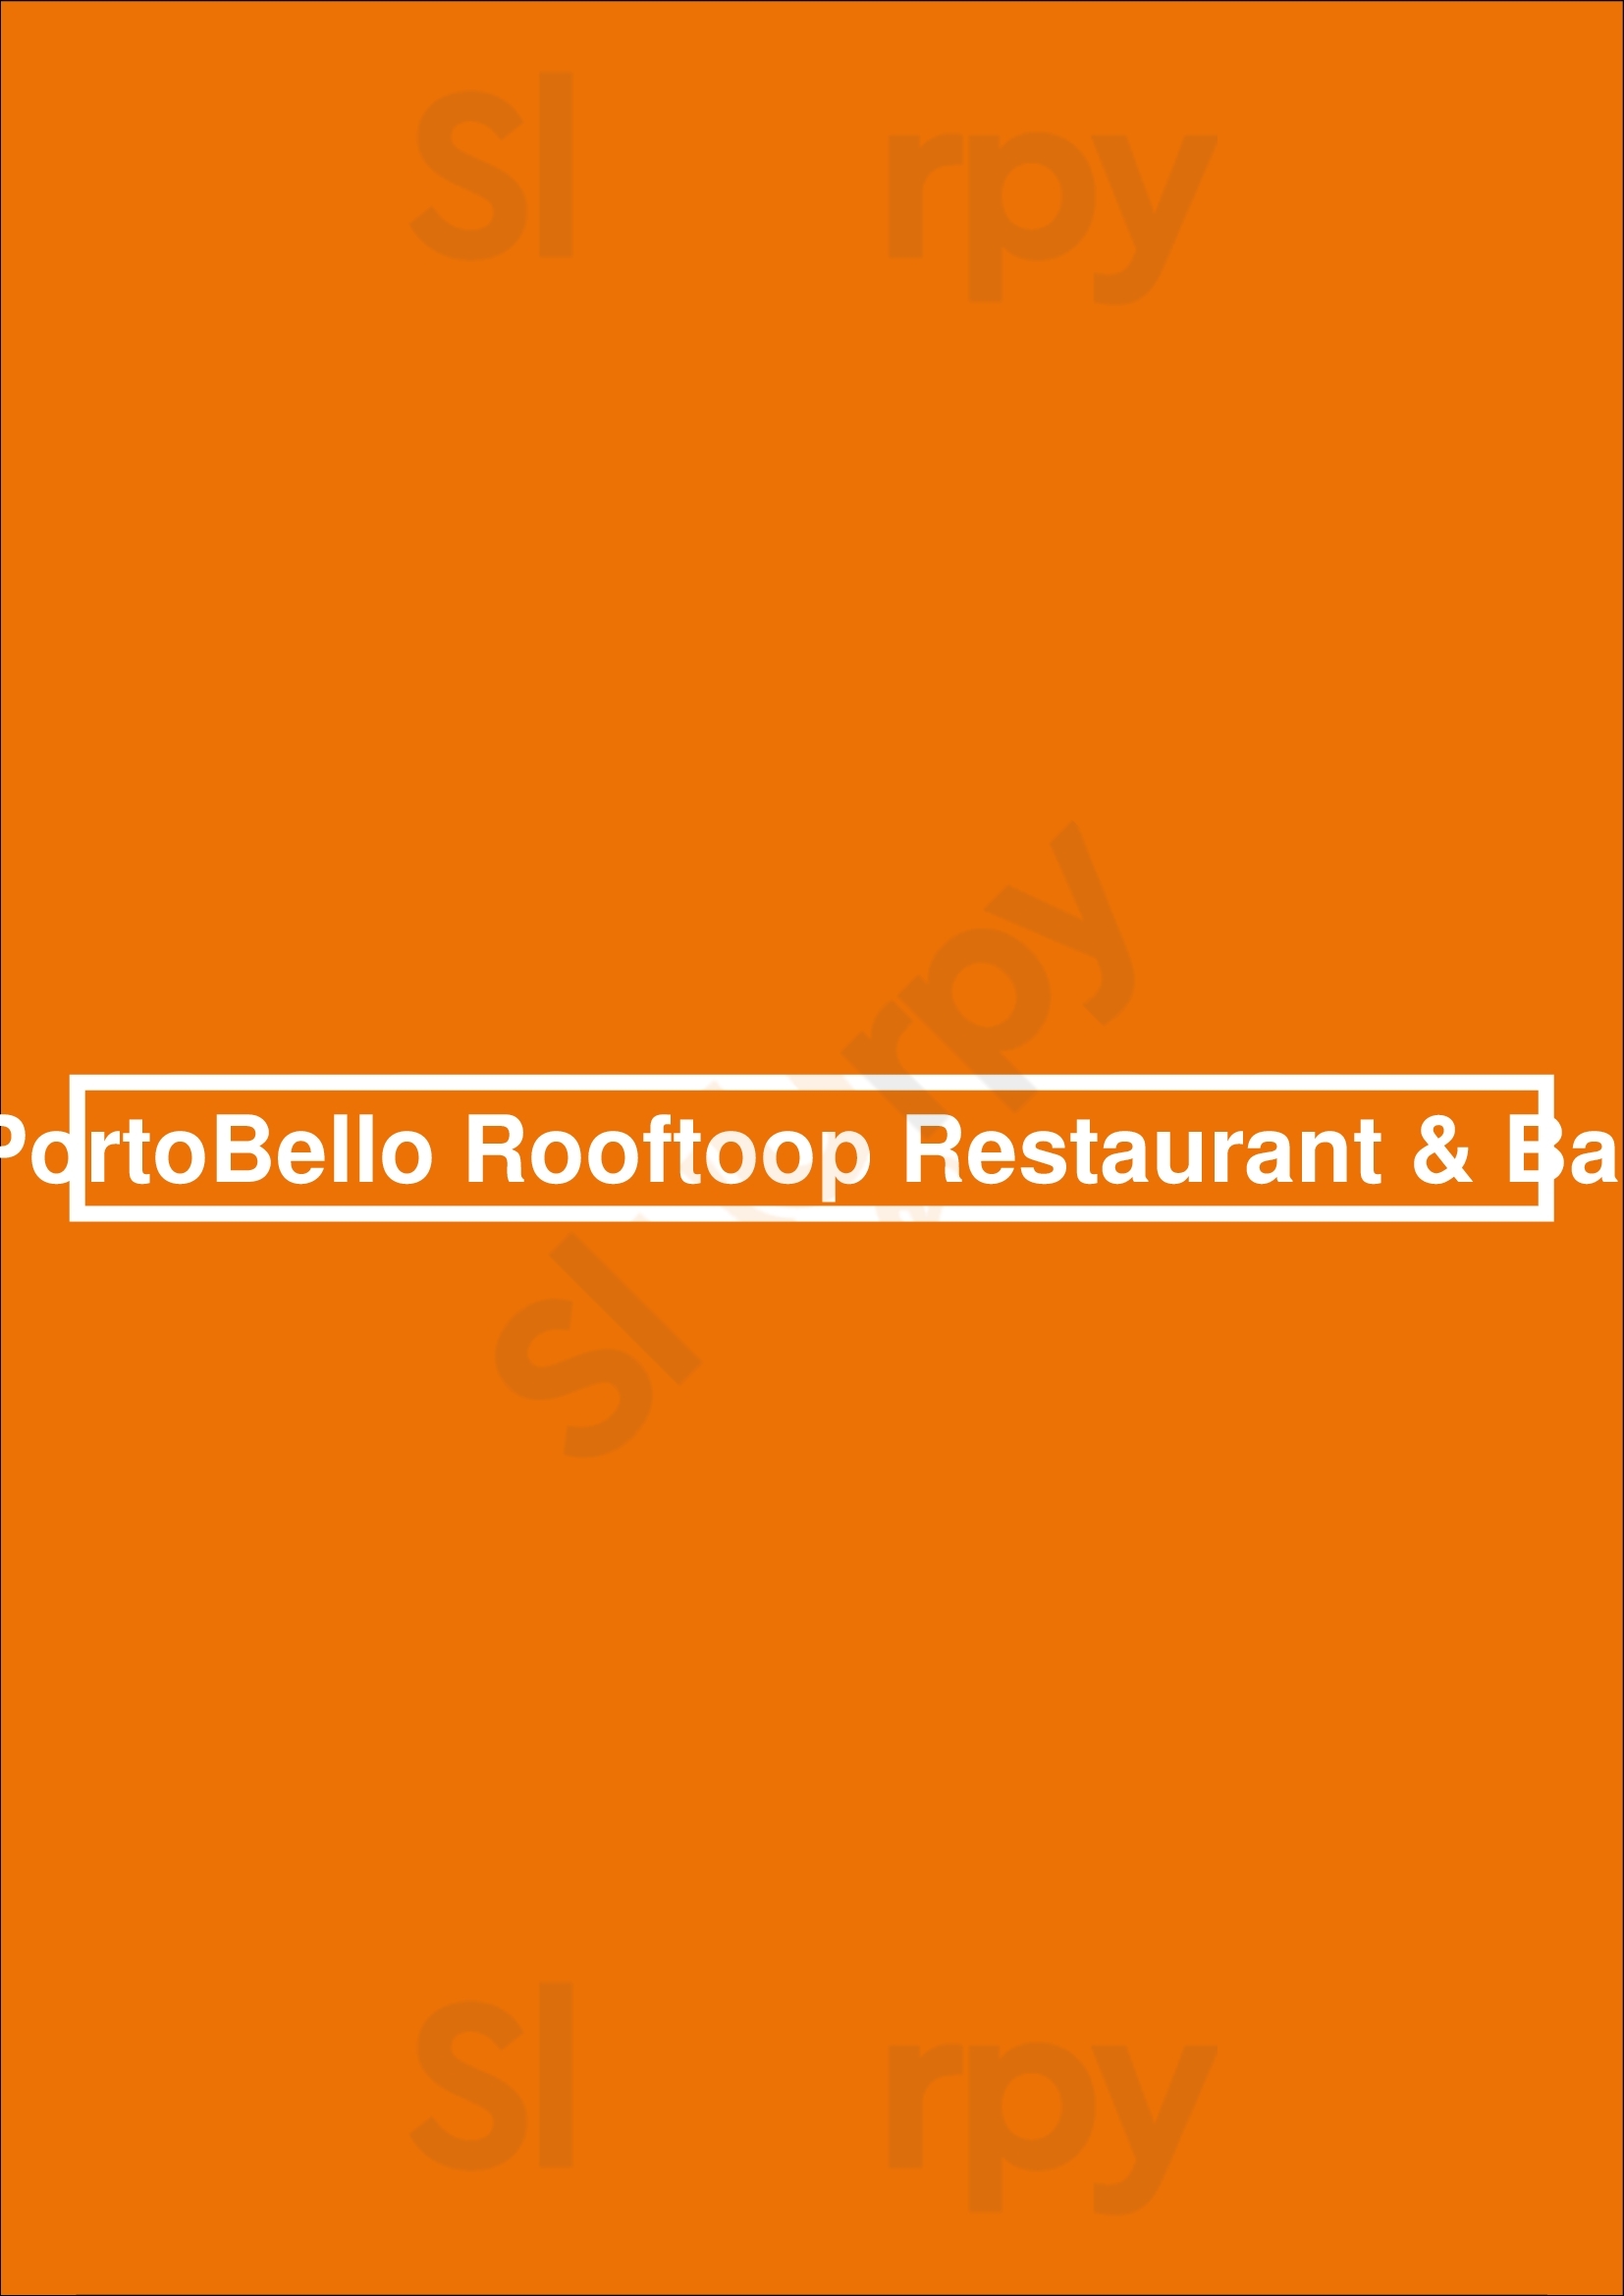 Portobello Rooftoop Restaurant & Bar Porto Menu - 1